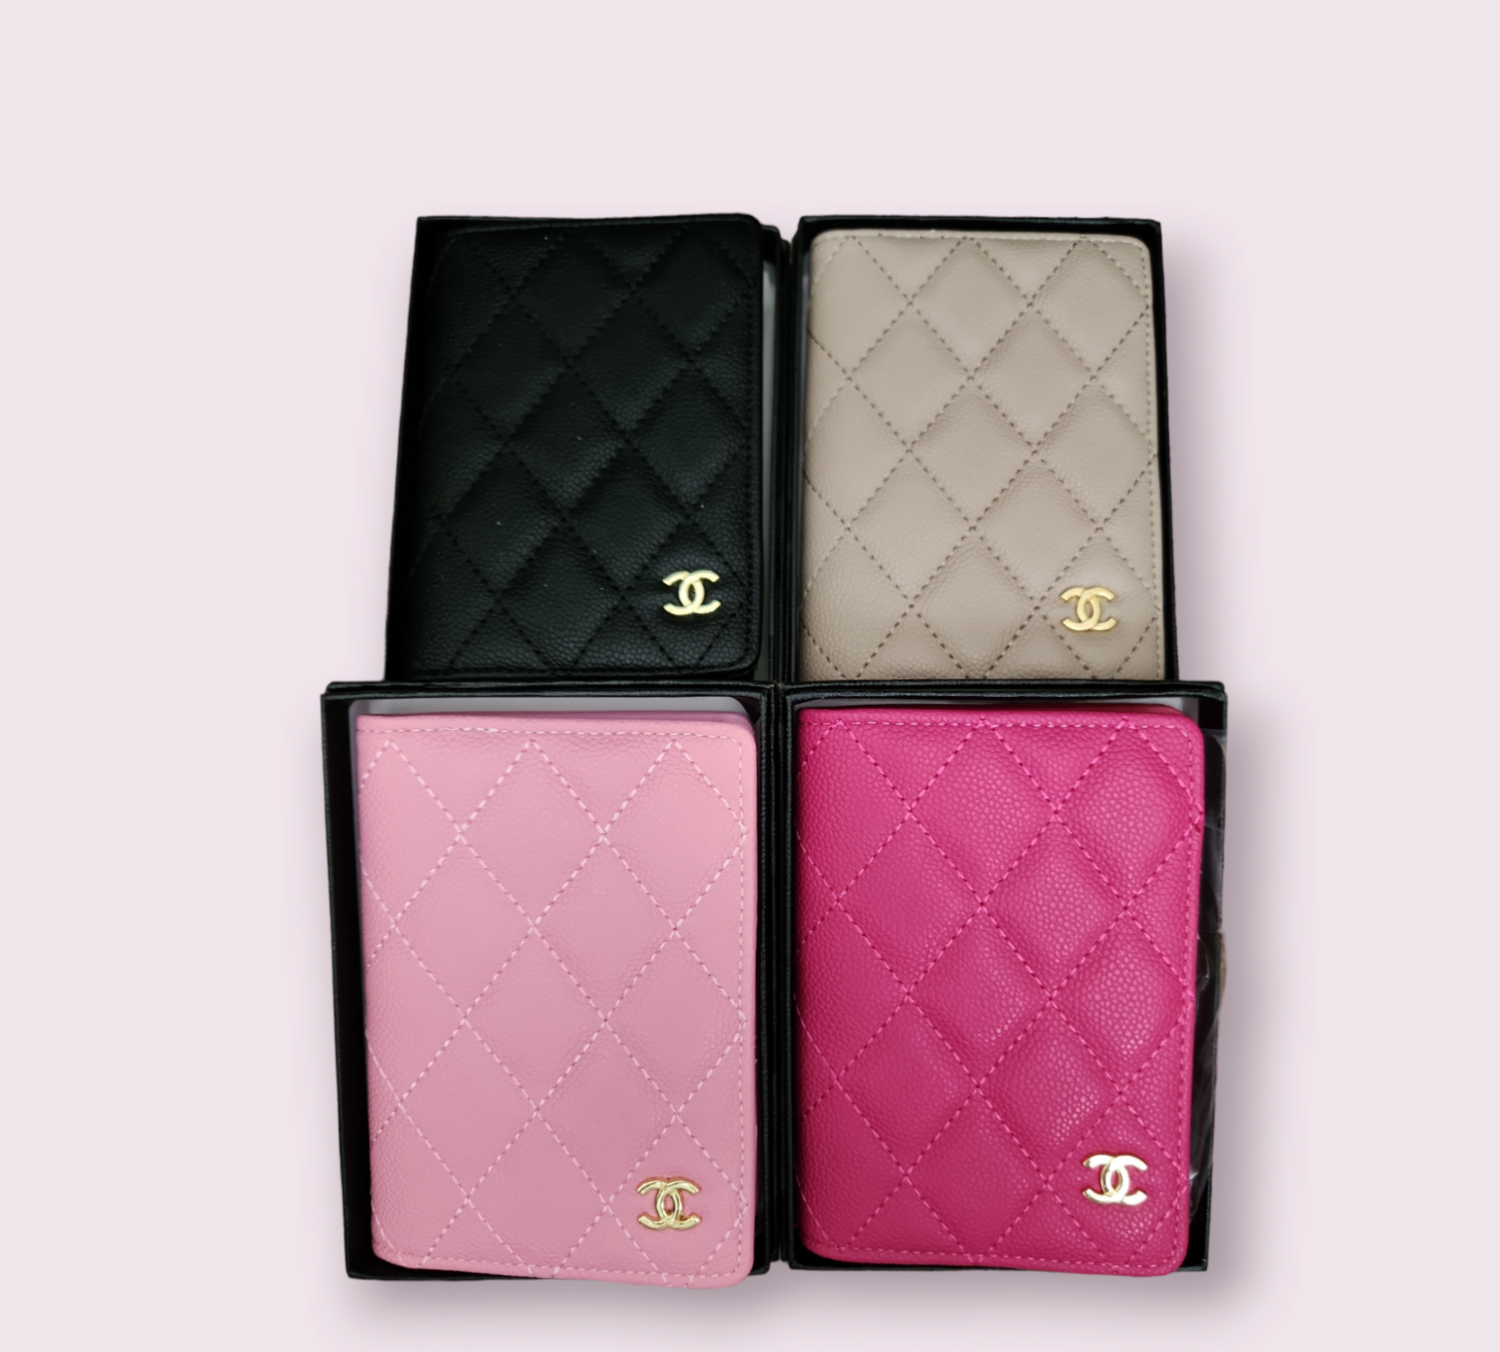 Chanel Passport Covers